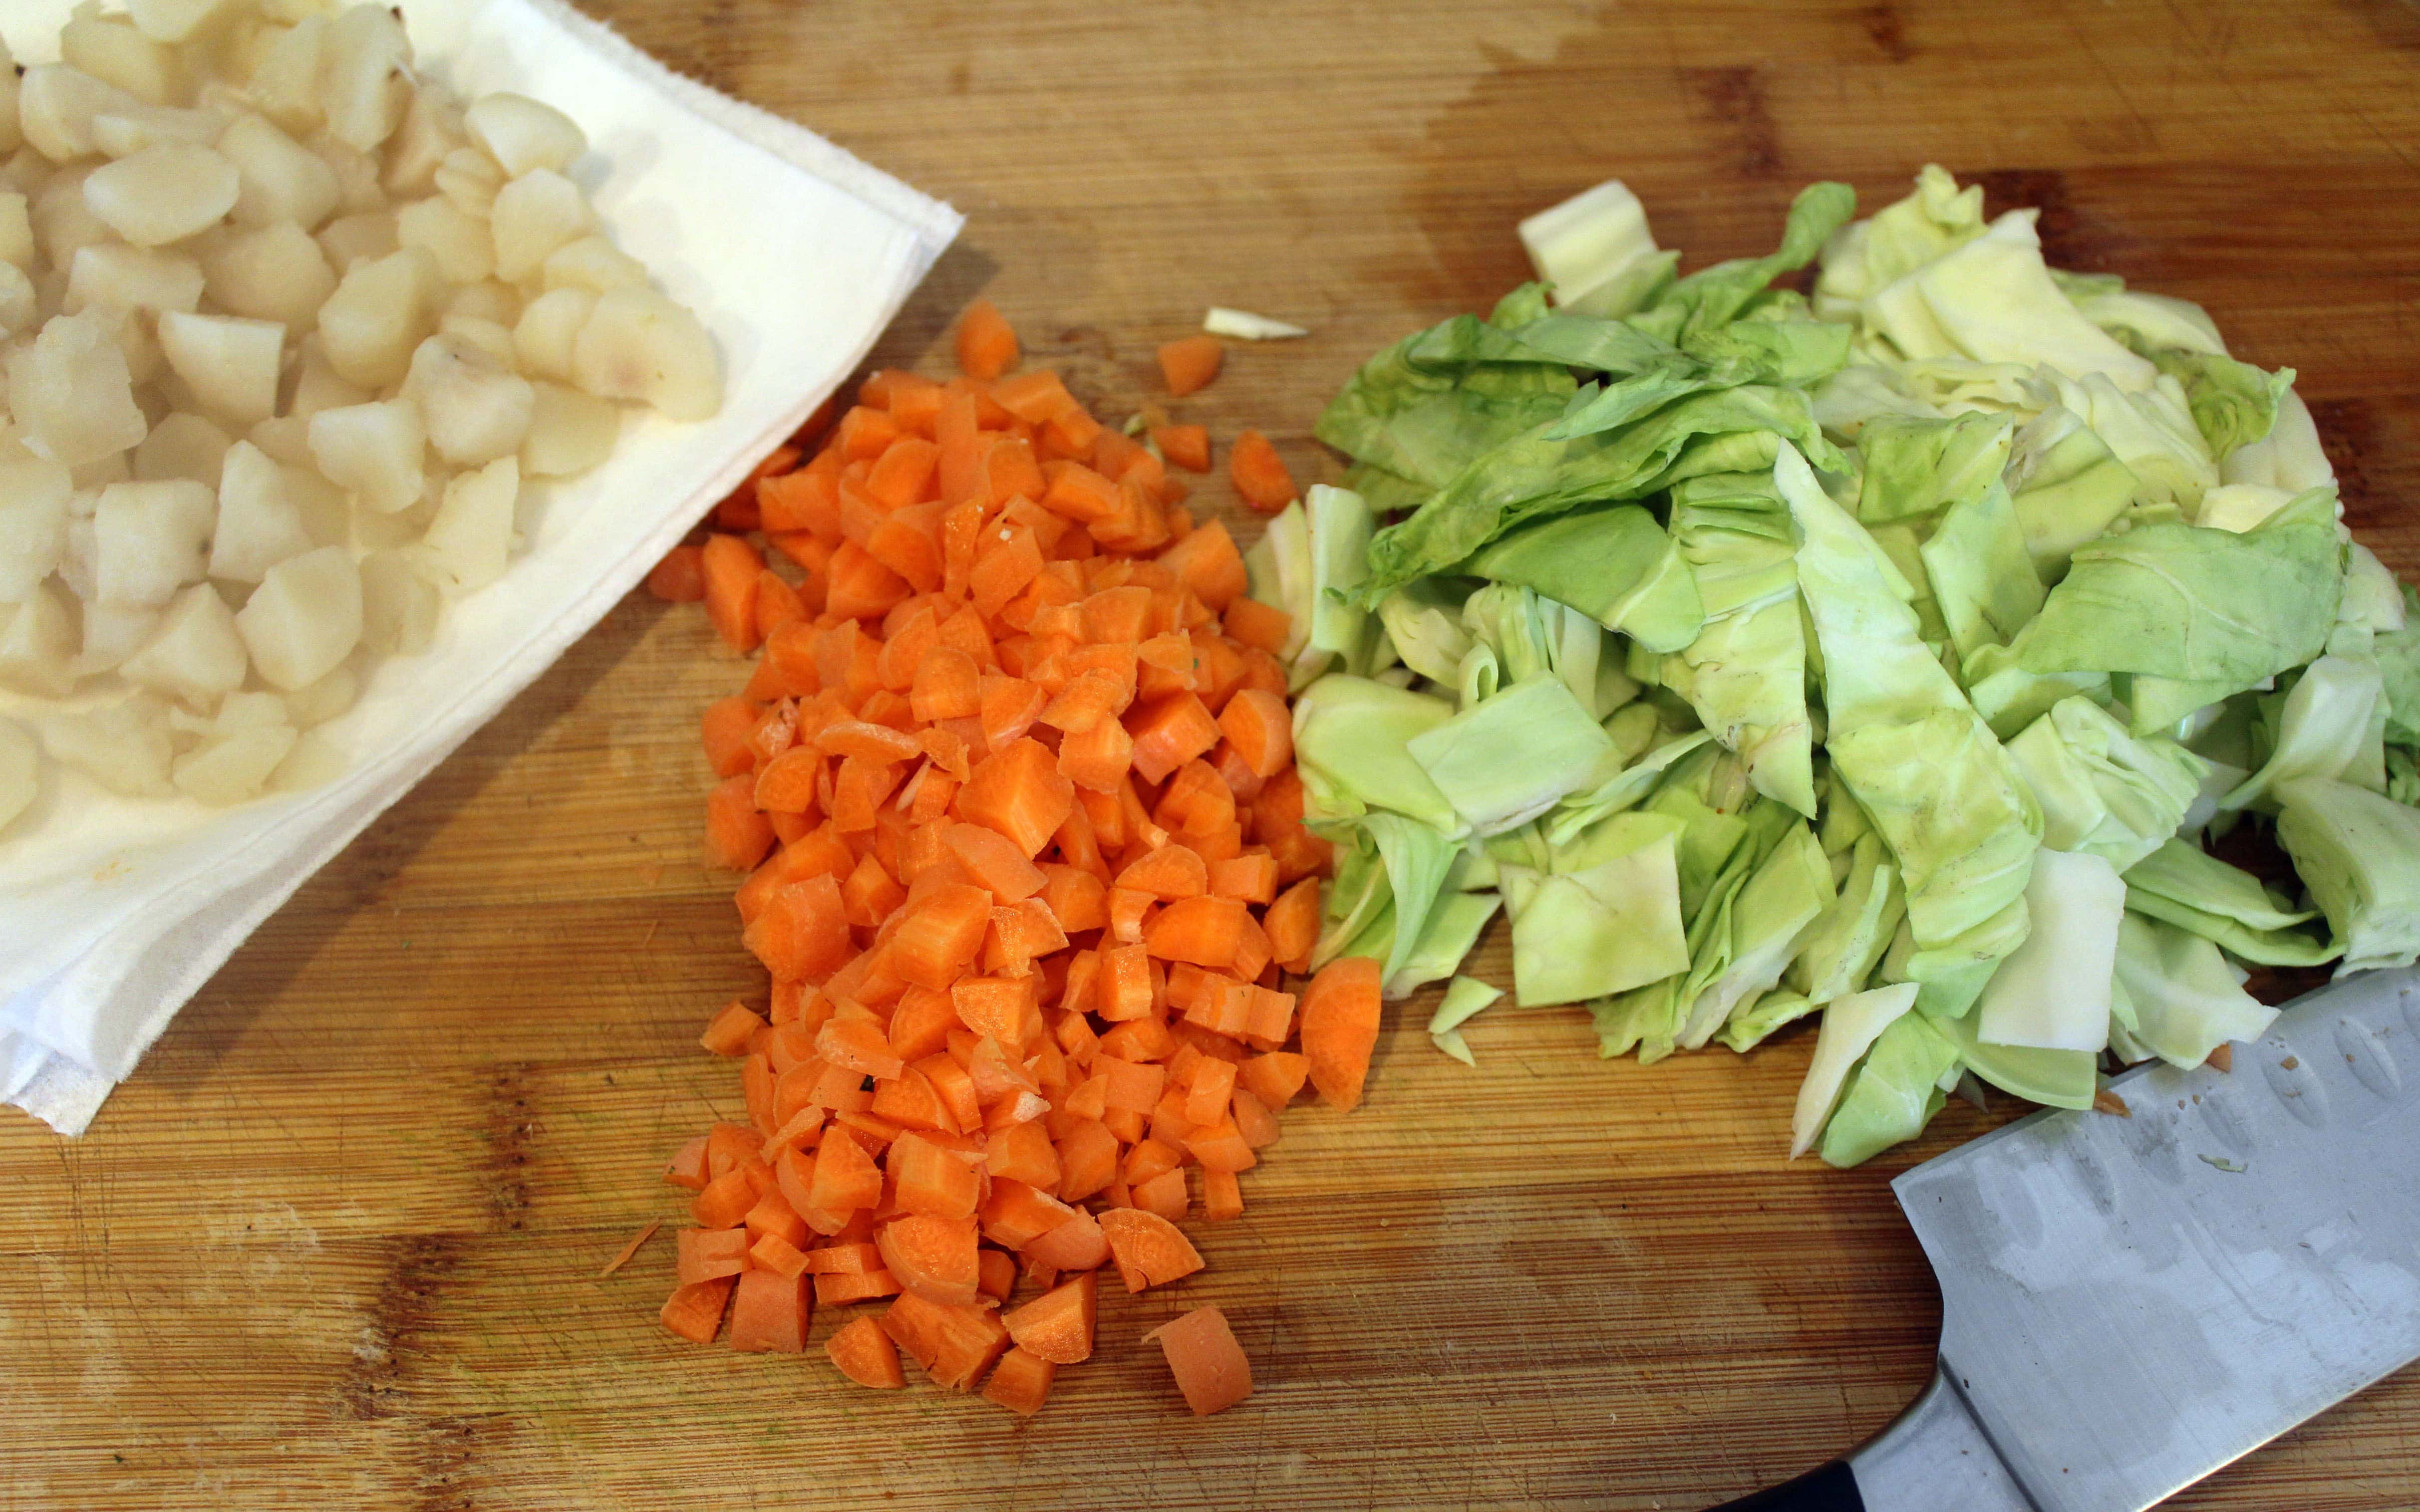 Chop and drain all veggies